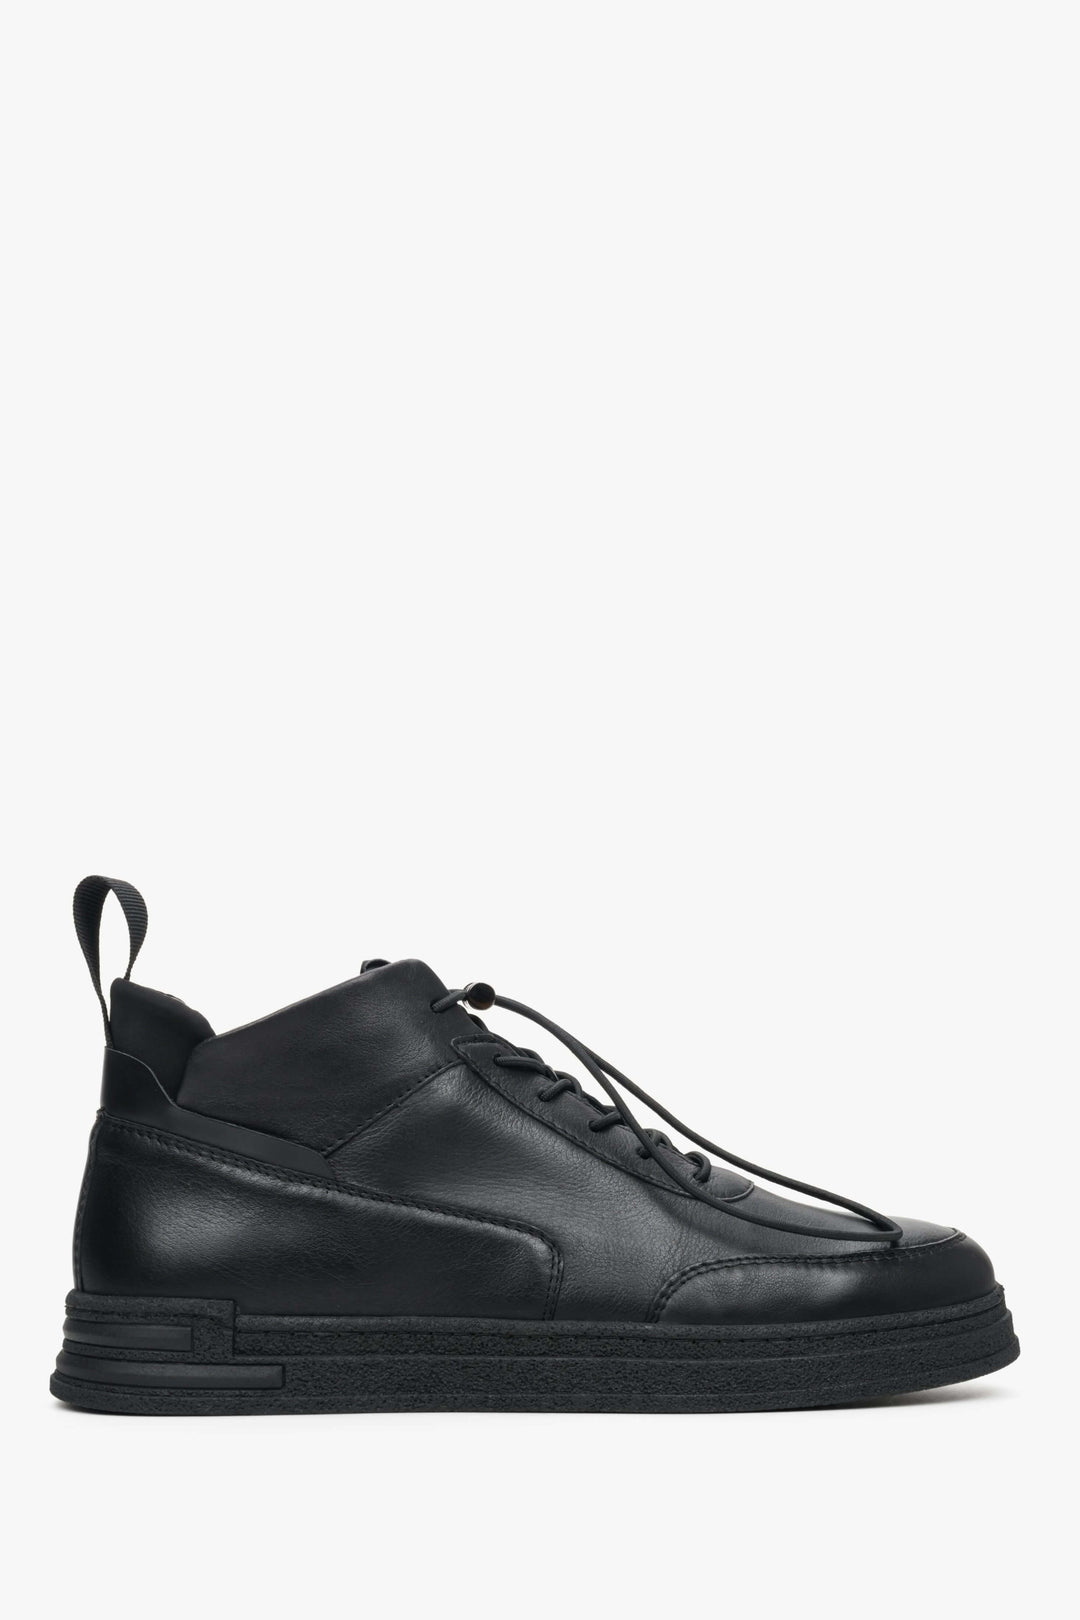 Men's sneakers in black color from genuine leather Estro - shoe profile.